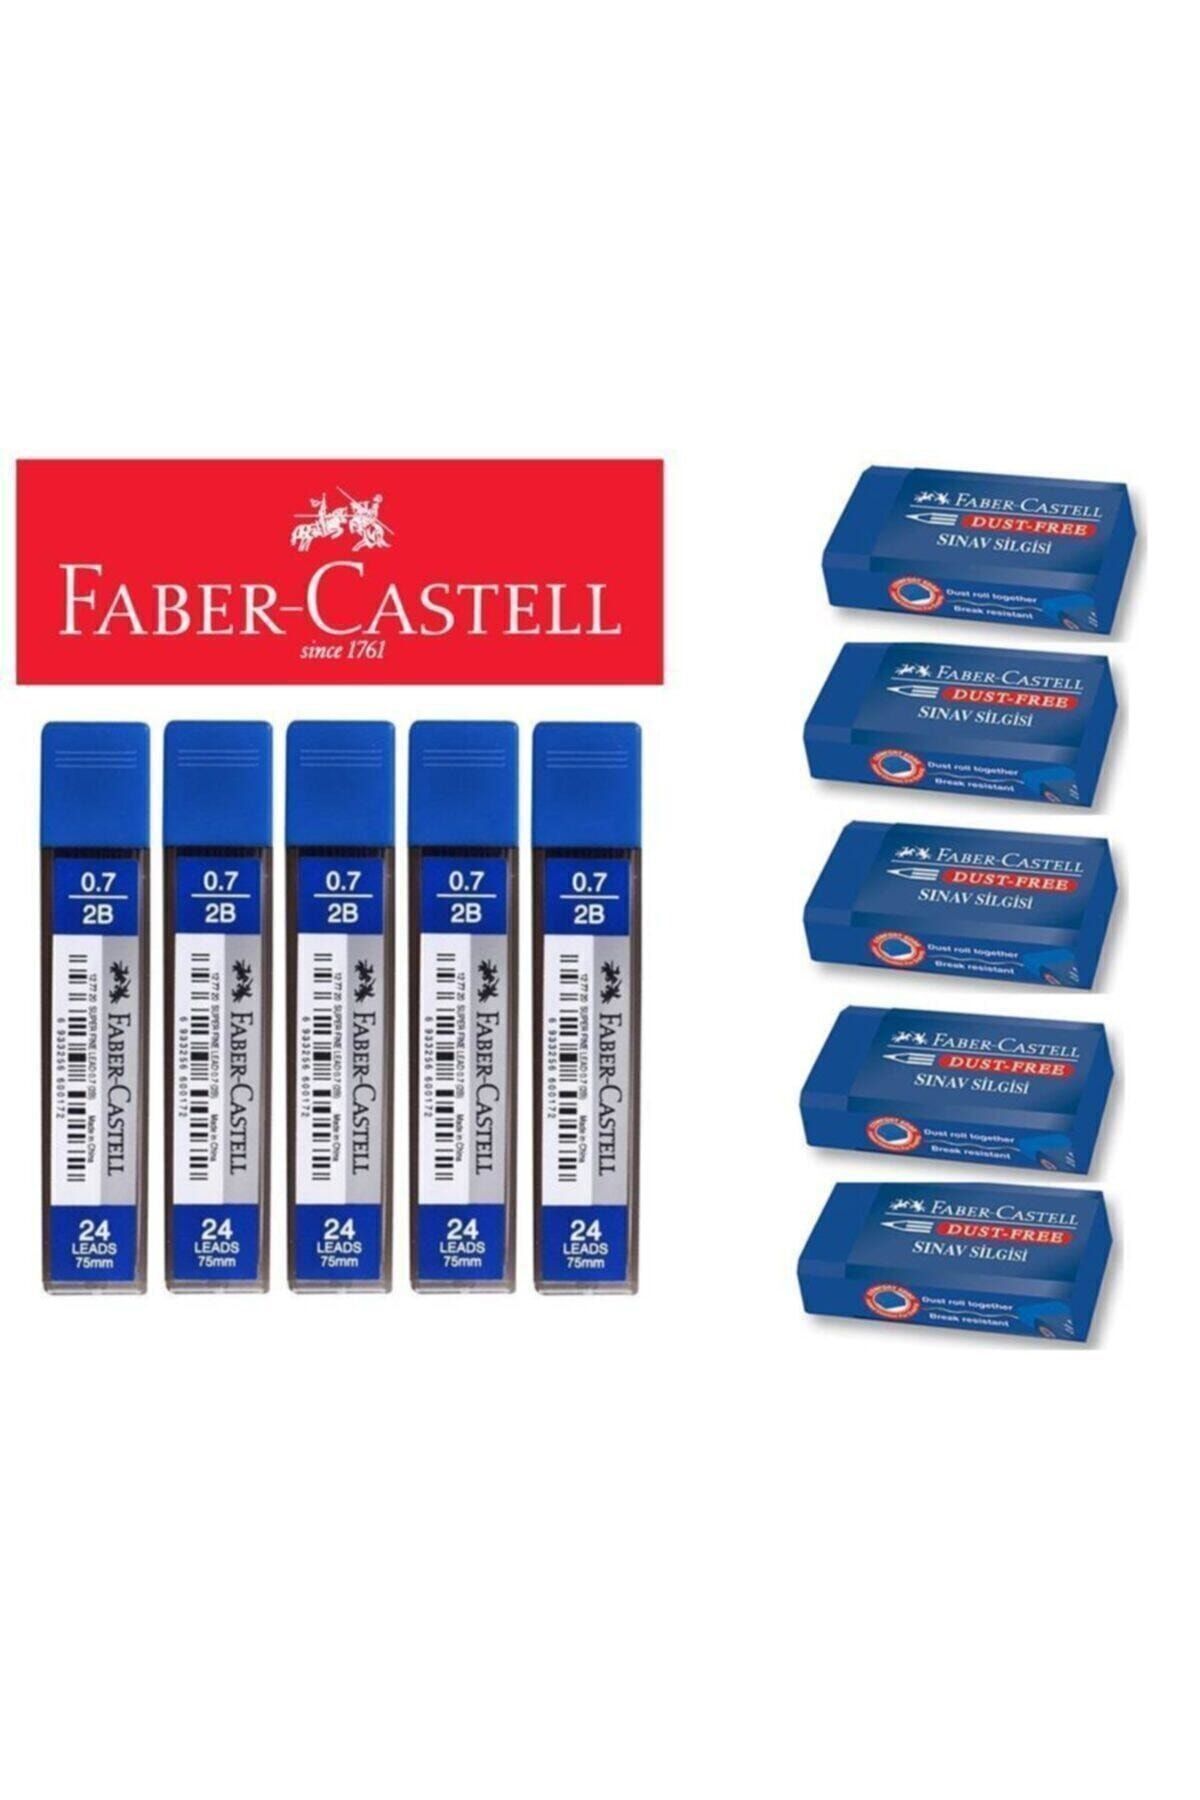 Faber Castell 5 Orta Boy Sınav Silgisi + 5 0.7 Uç Seti 5sınav5uç